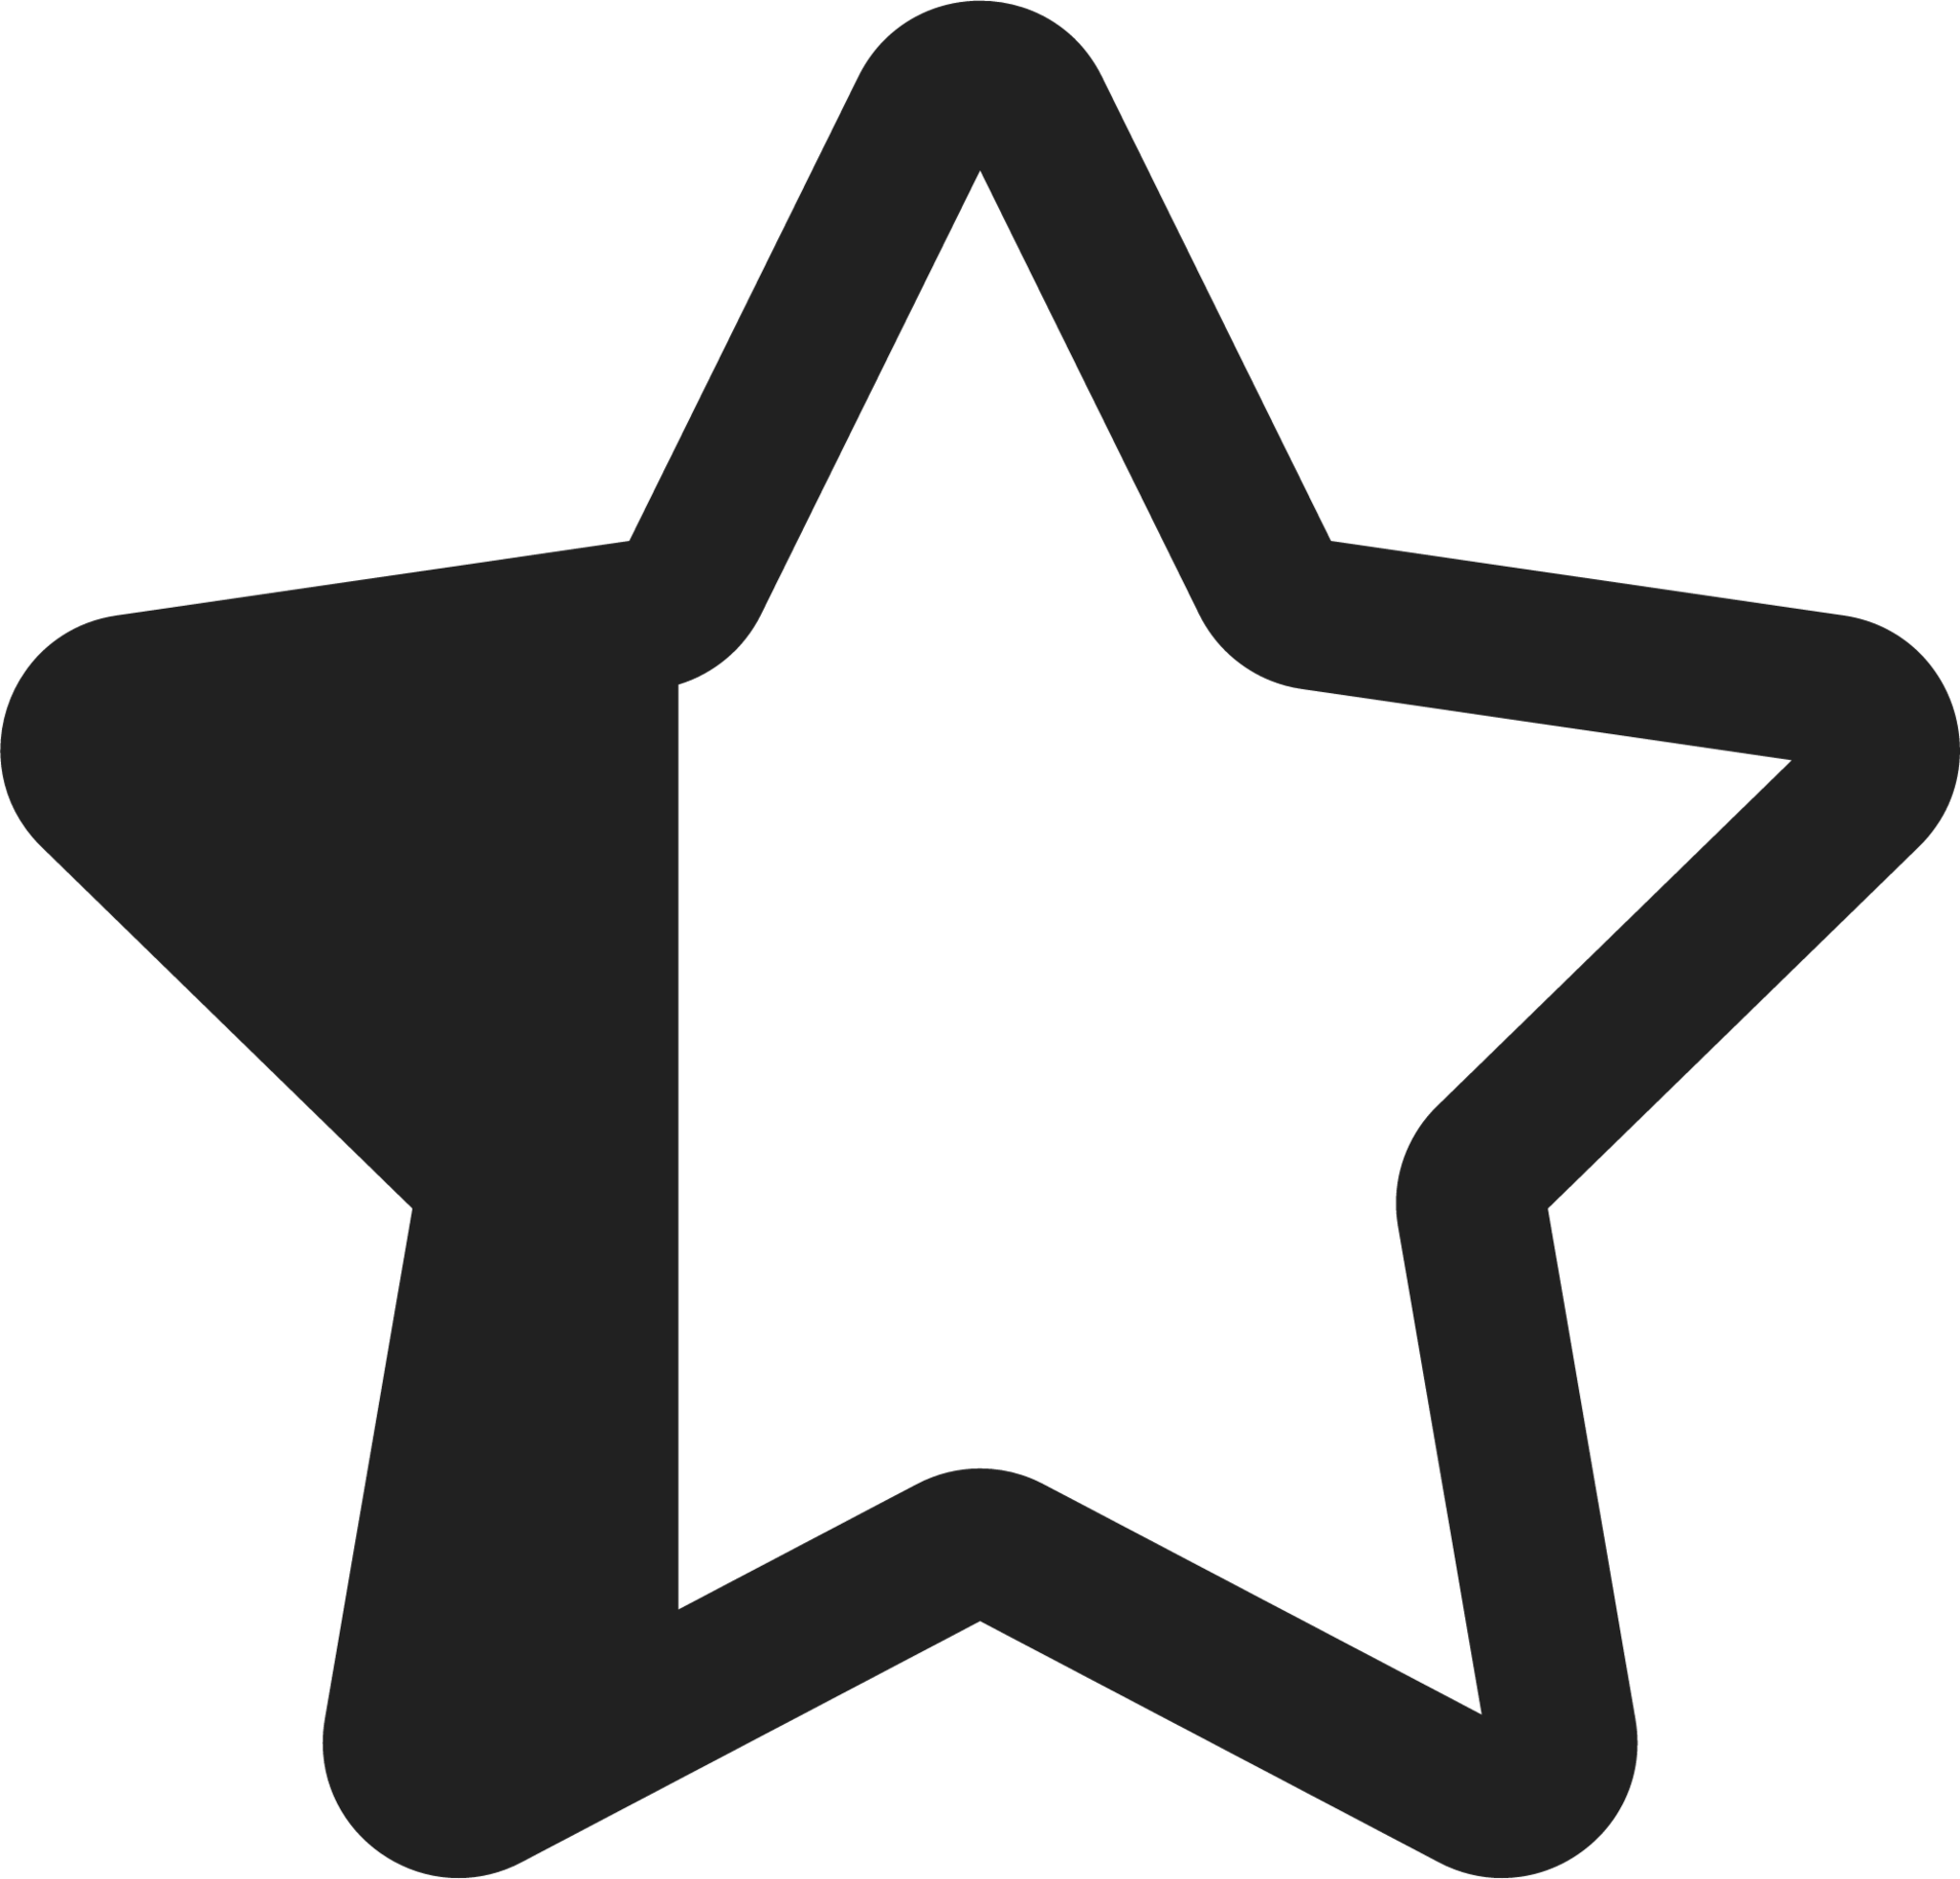 Star One Quarter icon